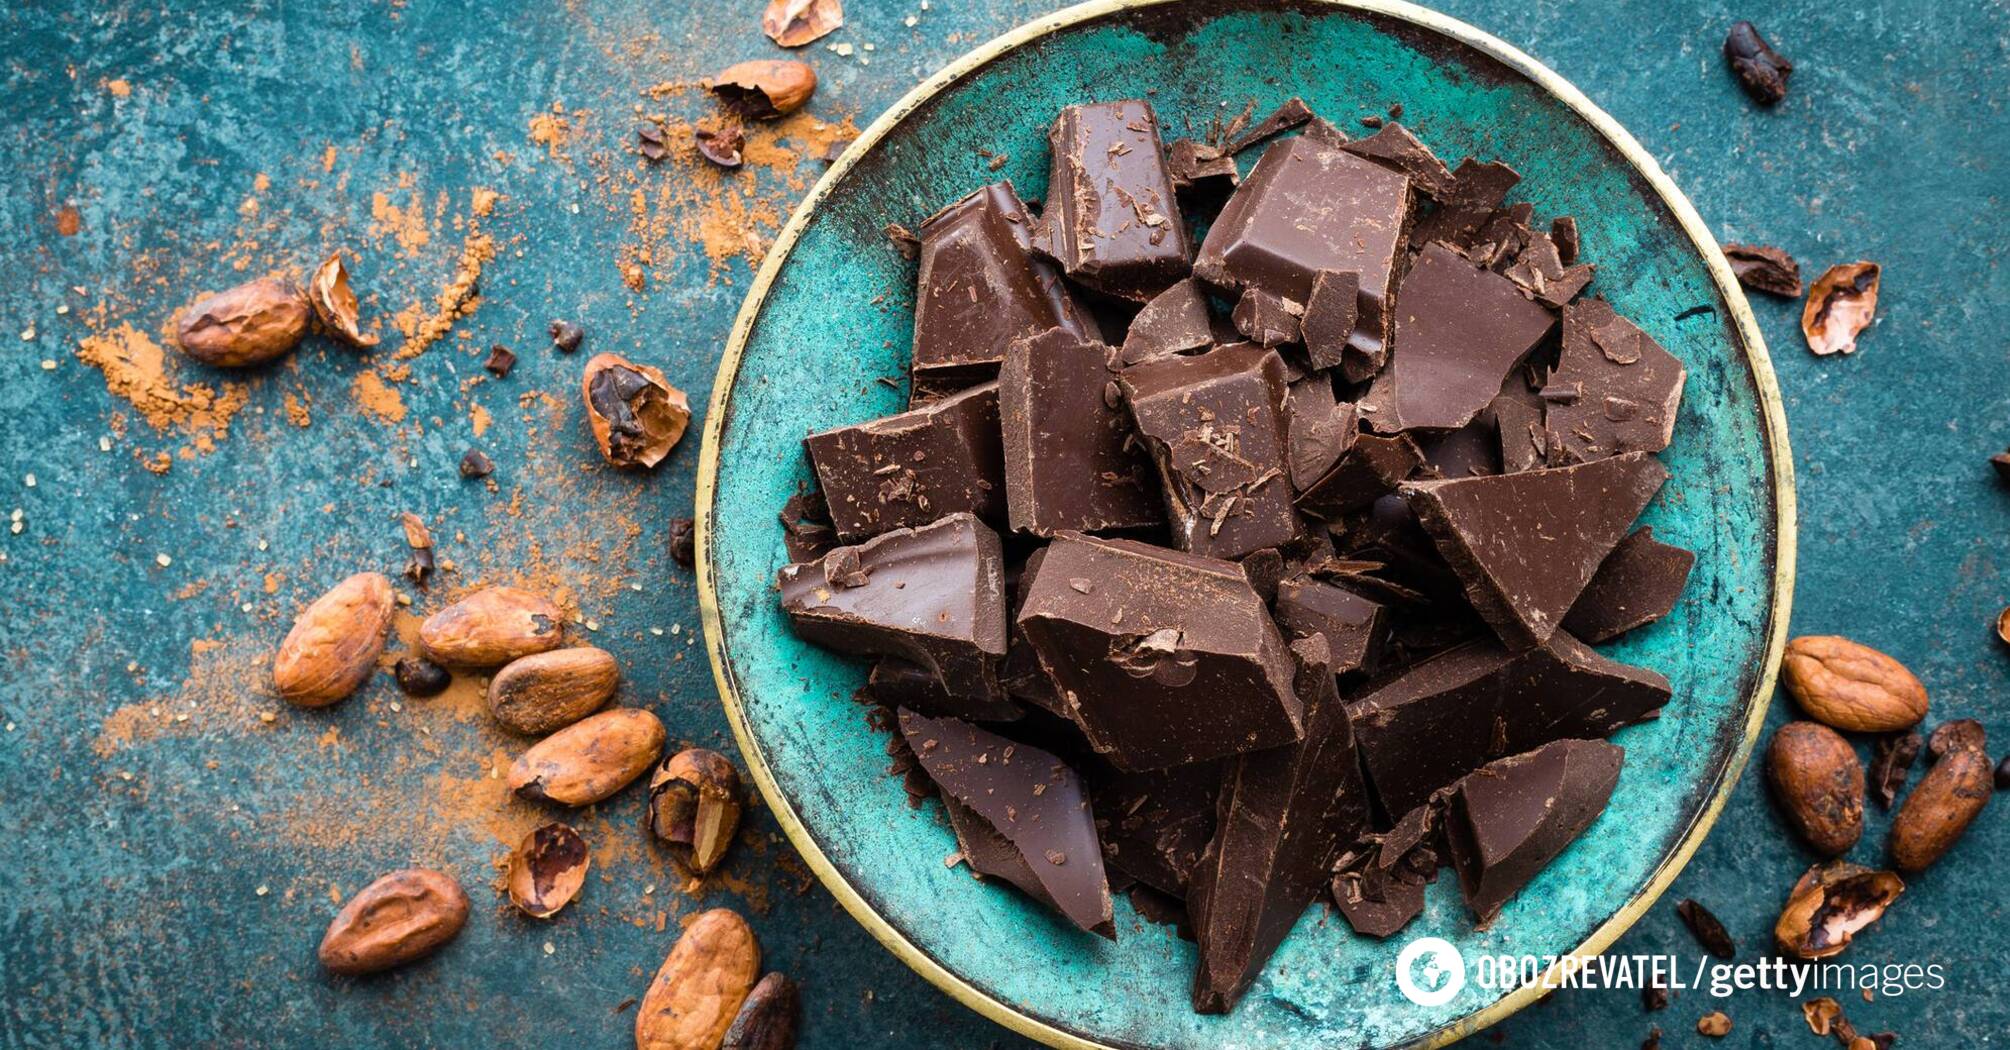 Chocolate helps to improve mood